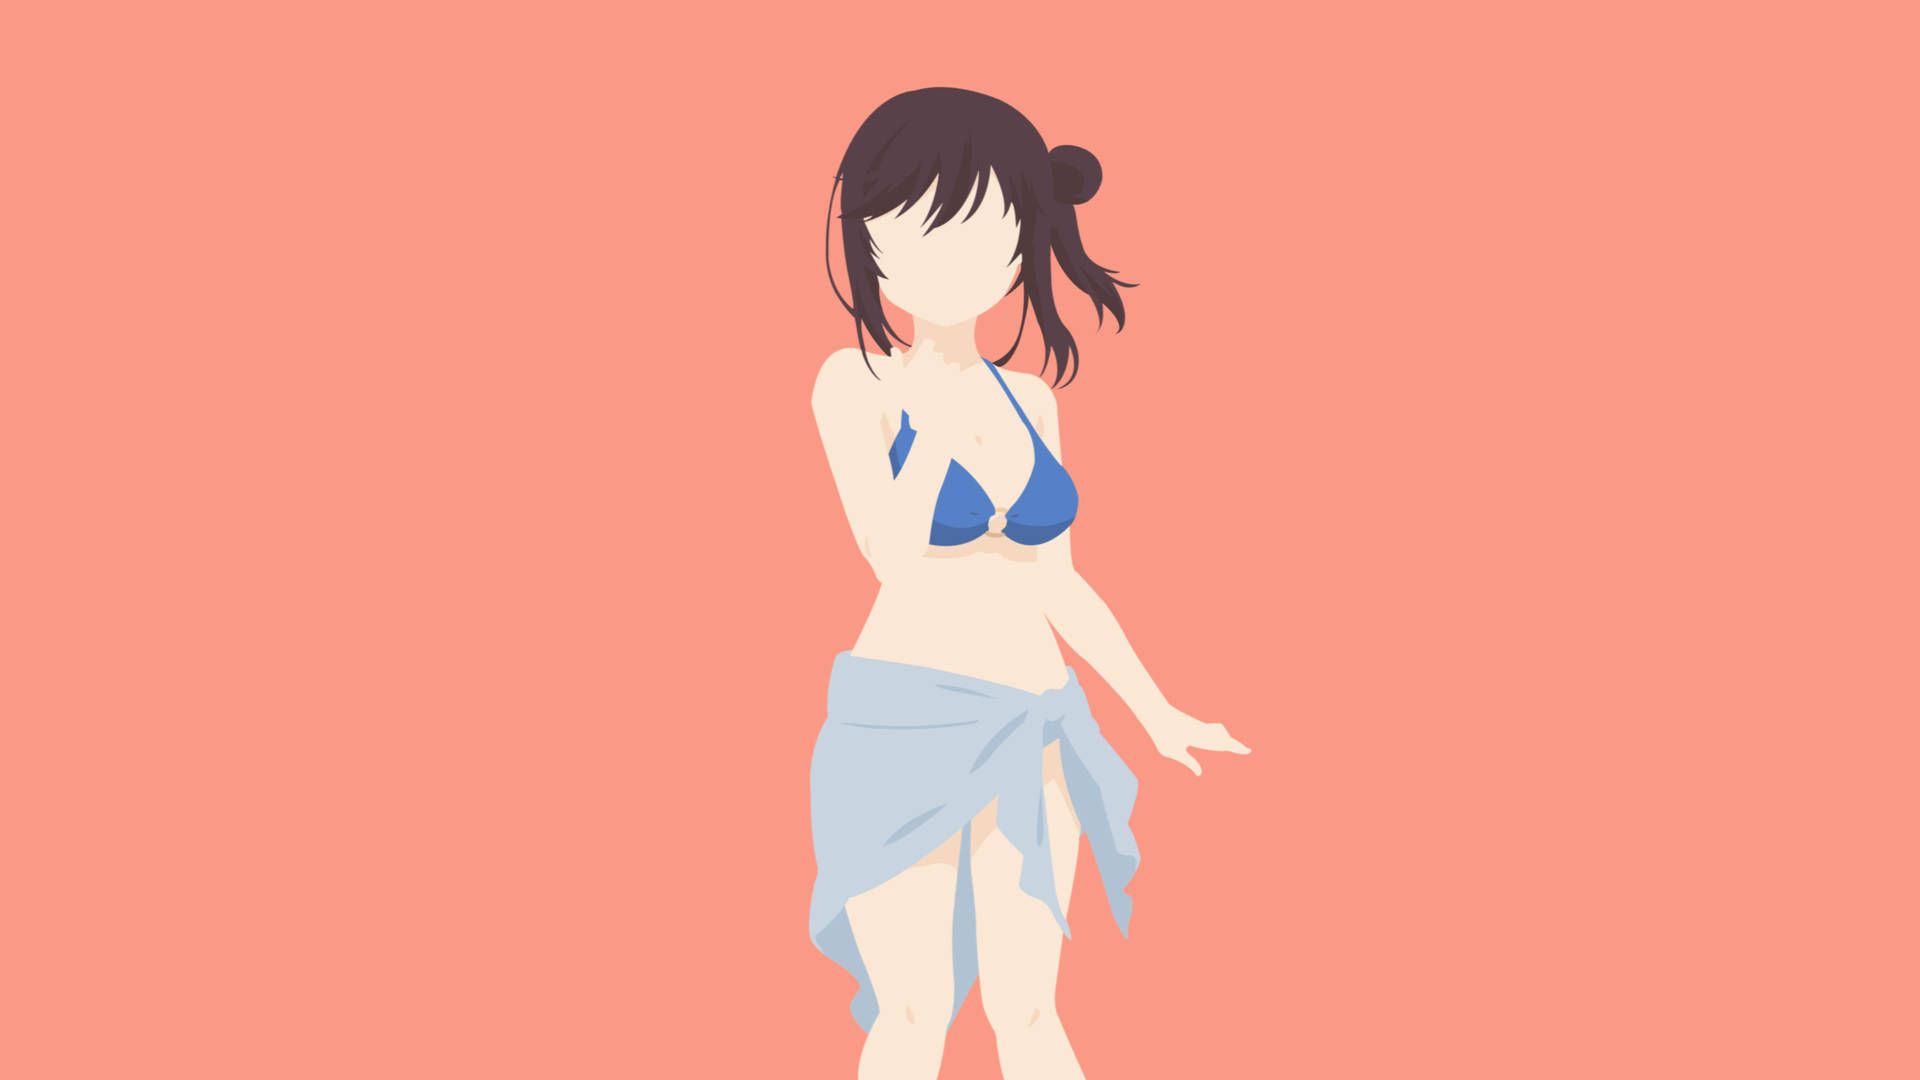 Anime Woman Bikini Vector Art Wallpaper